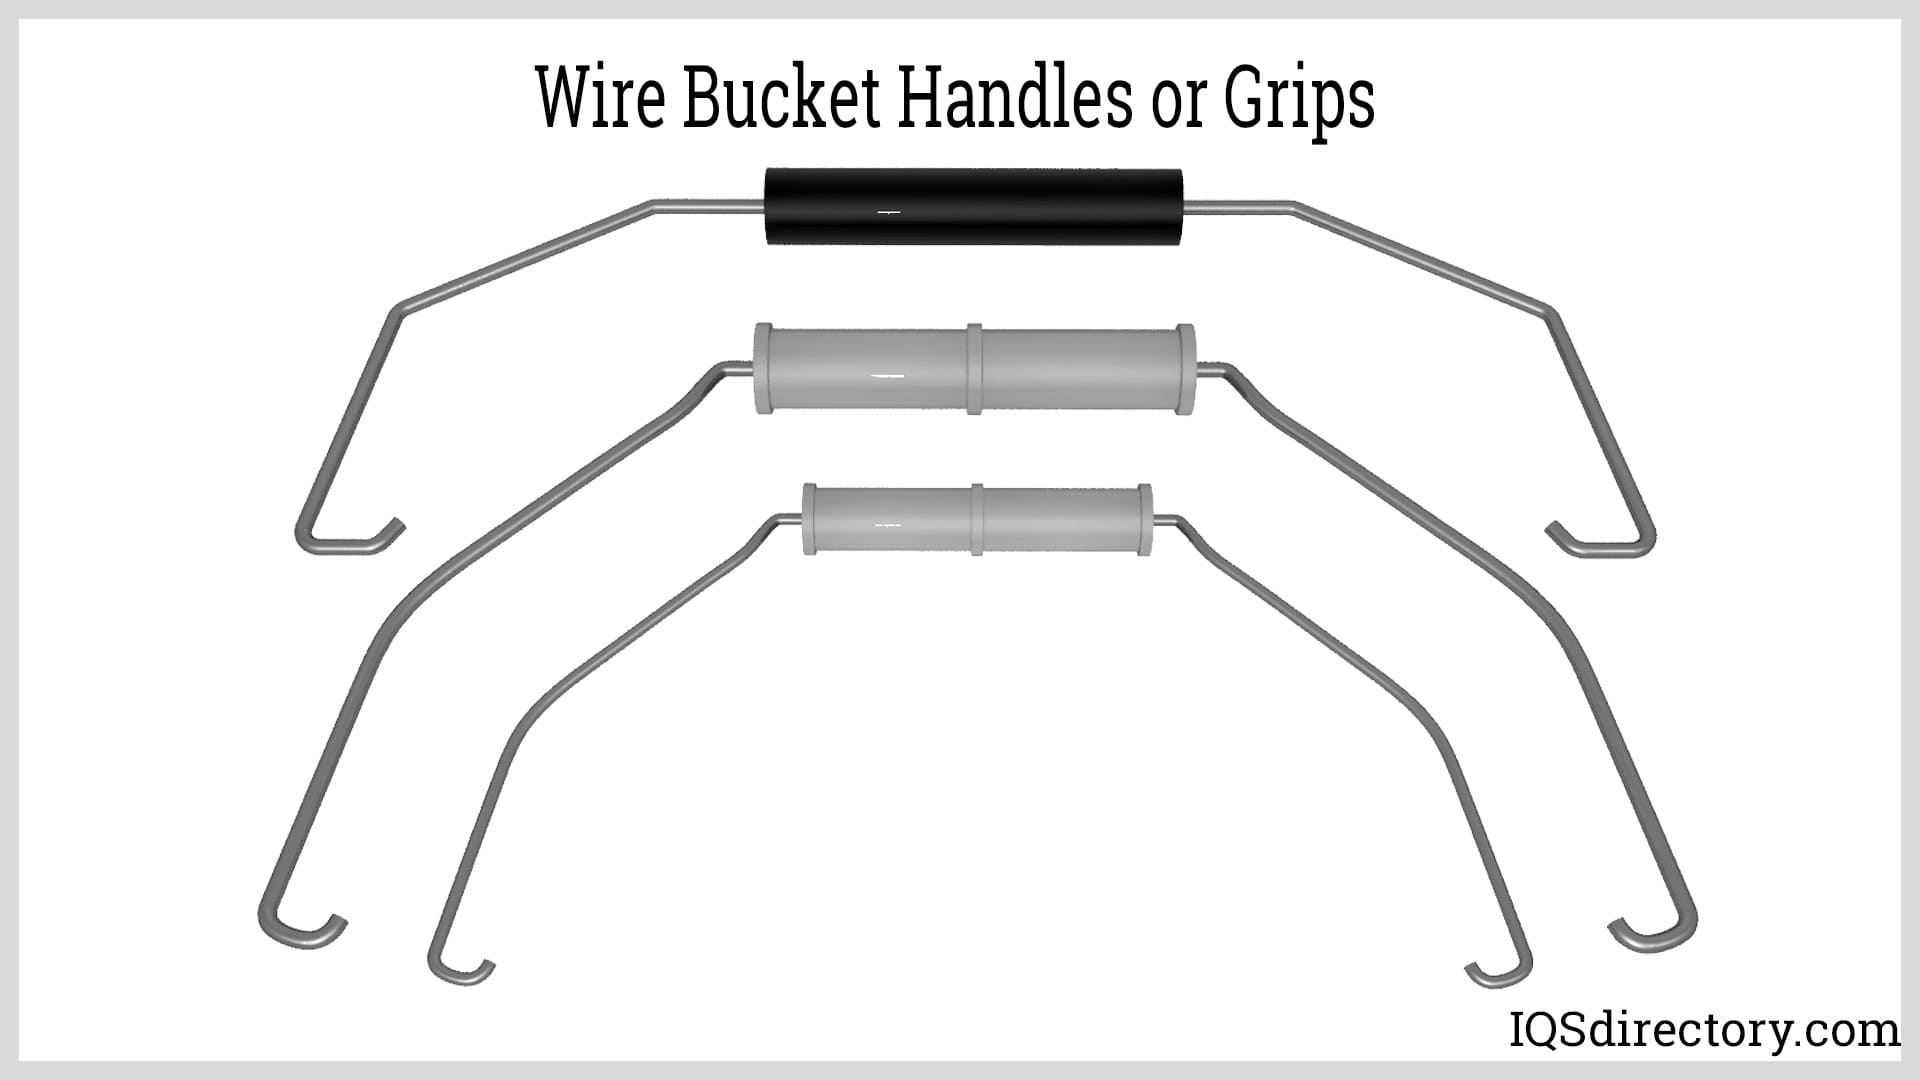 Wire Bucket Handles or Grips